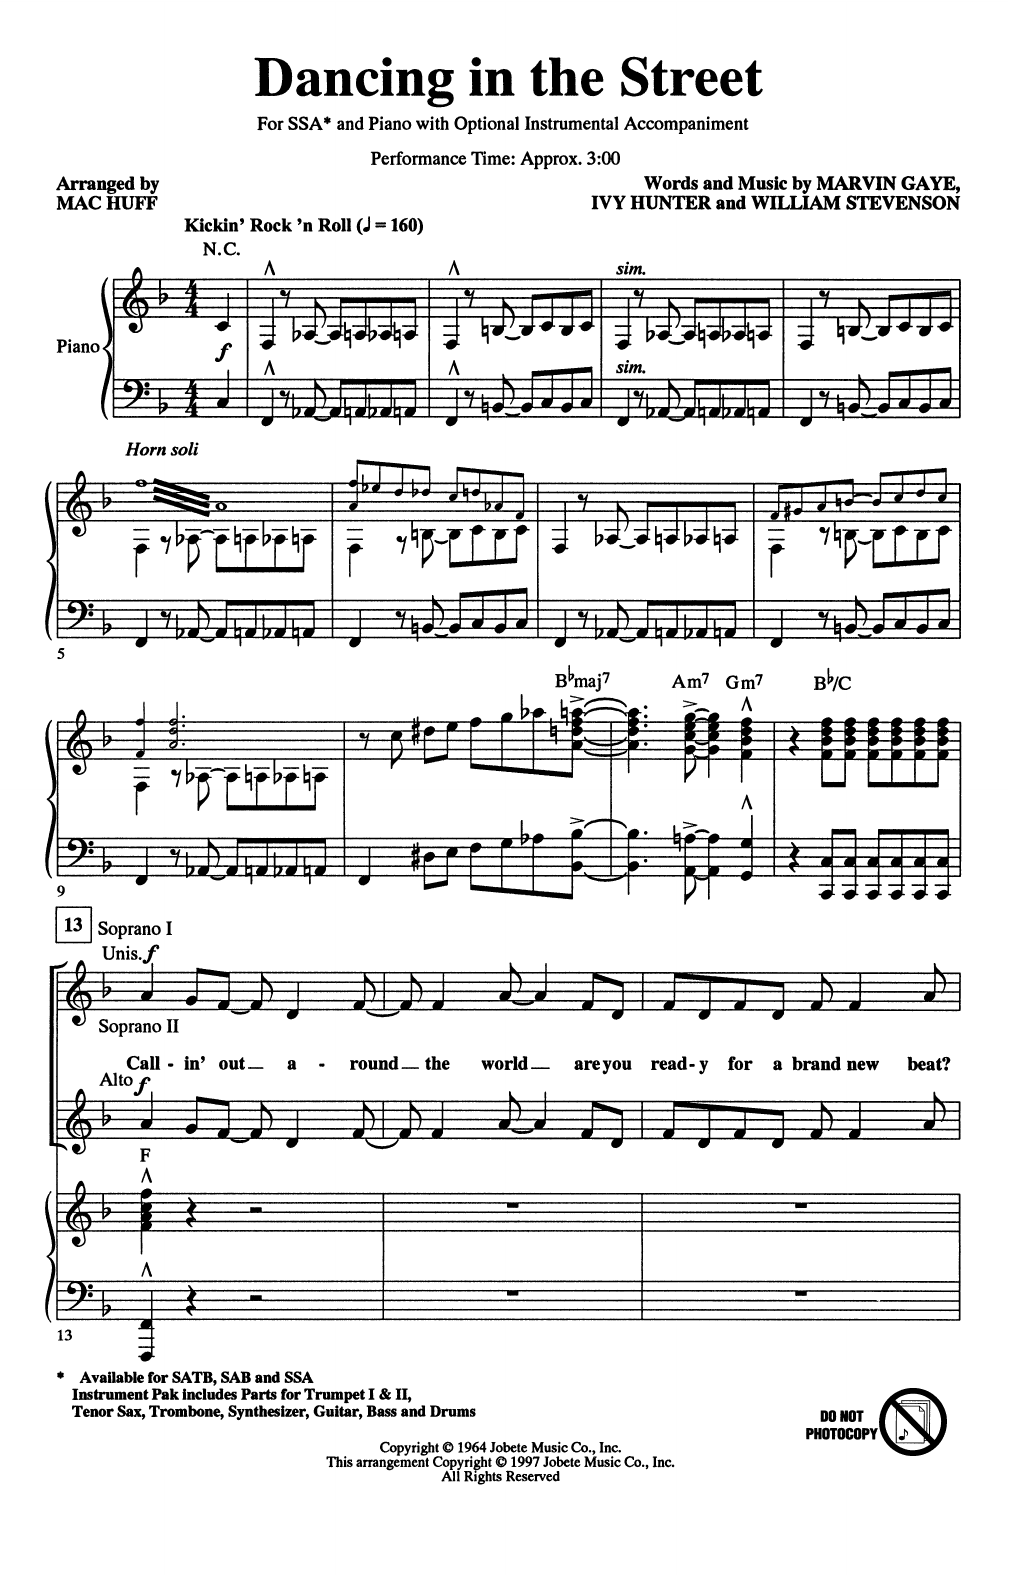 Martha & The Vandellas Dancing In The Street (arr. Mac Huff) Sheet Music Notes & Chords for SATB Choir - Download or Print PDF